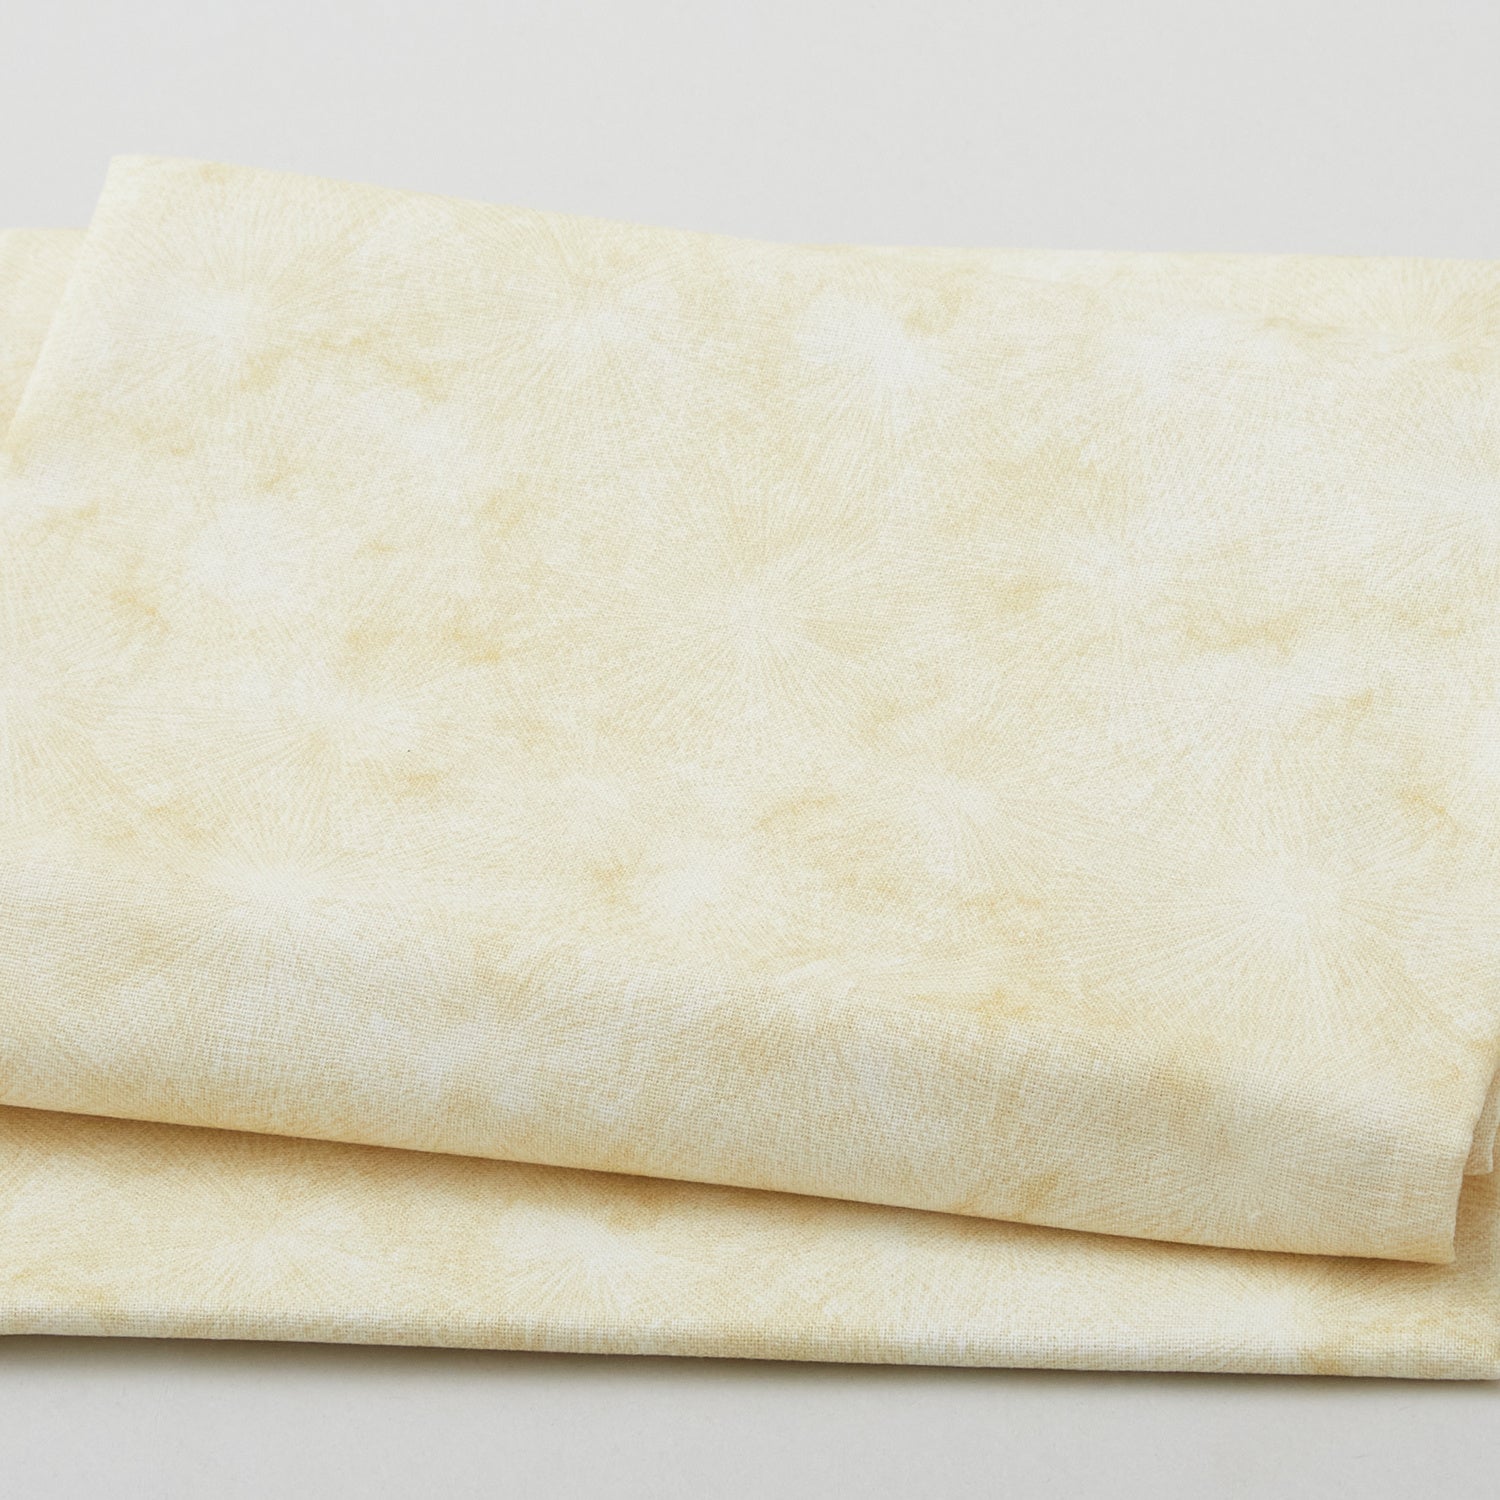 42x54 / 1.5 Yards of Kona Cotton / Fabric